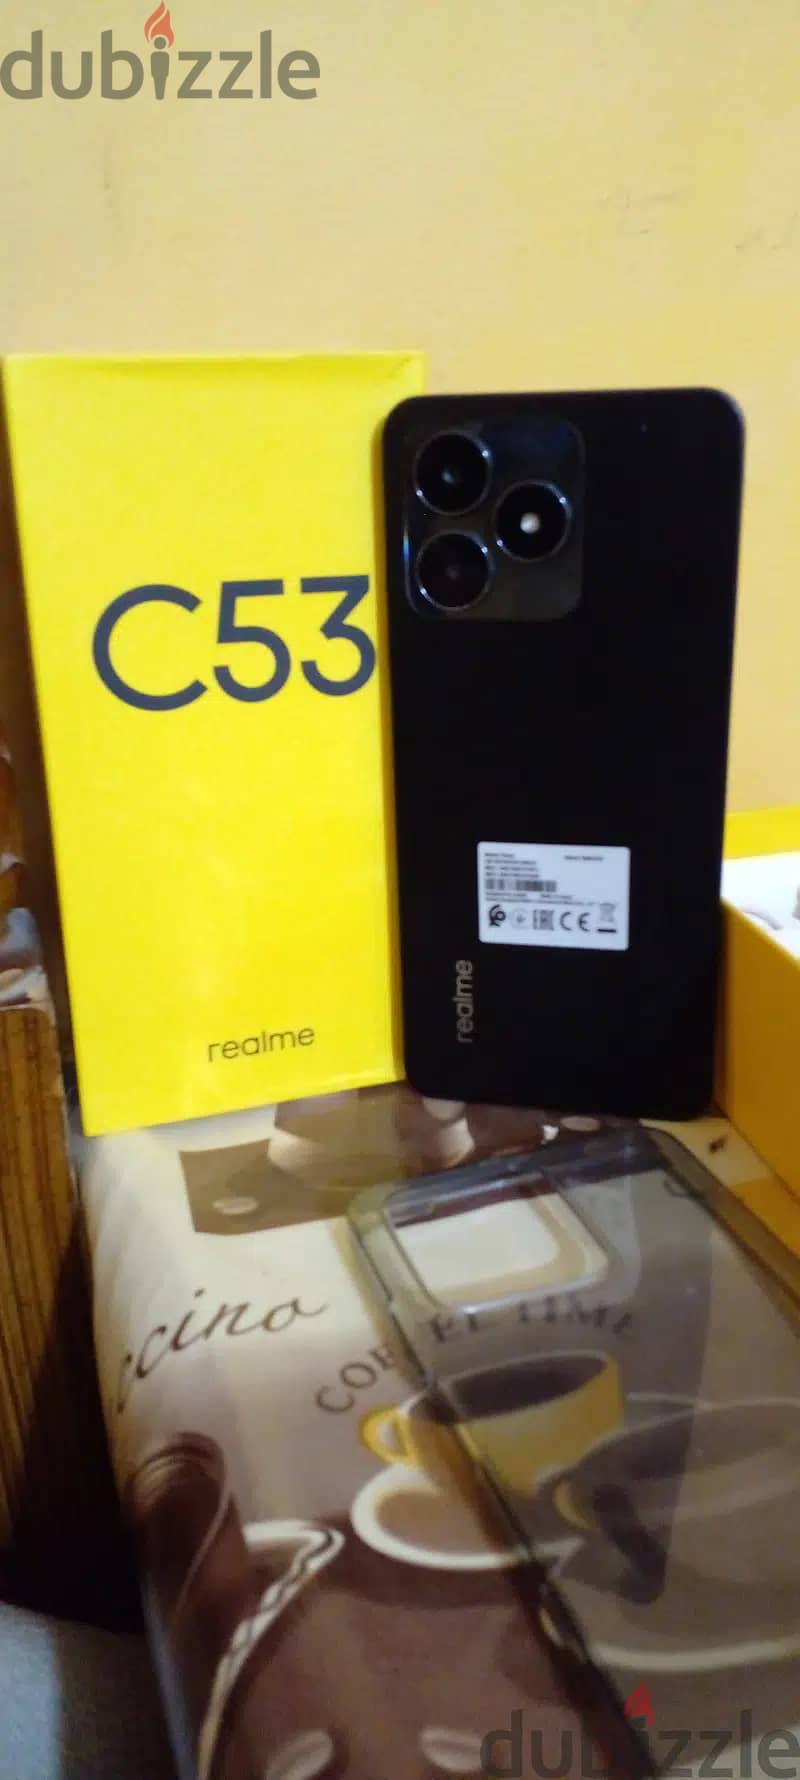 Realme c53 1